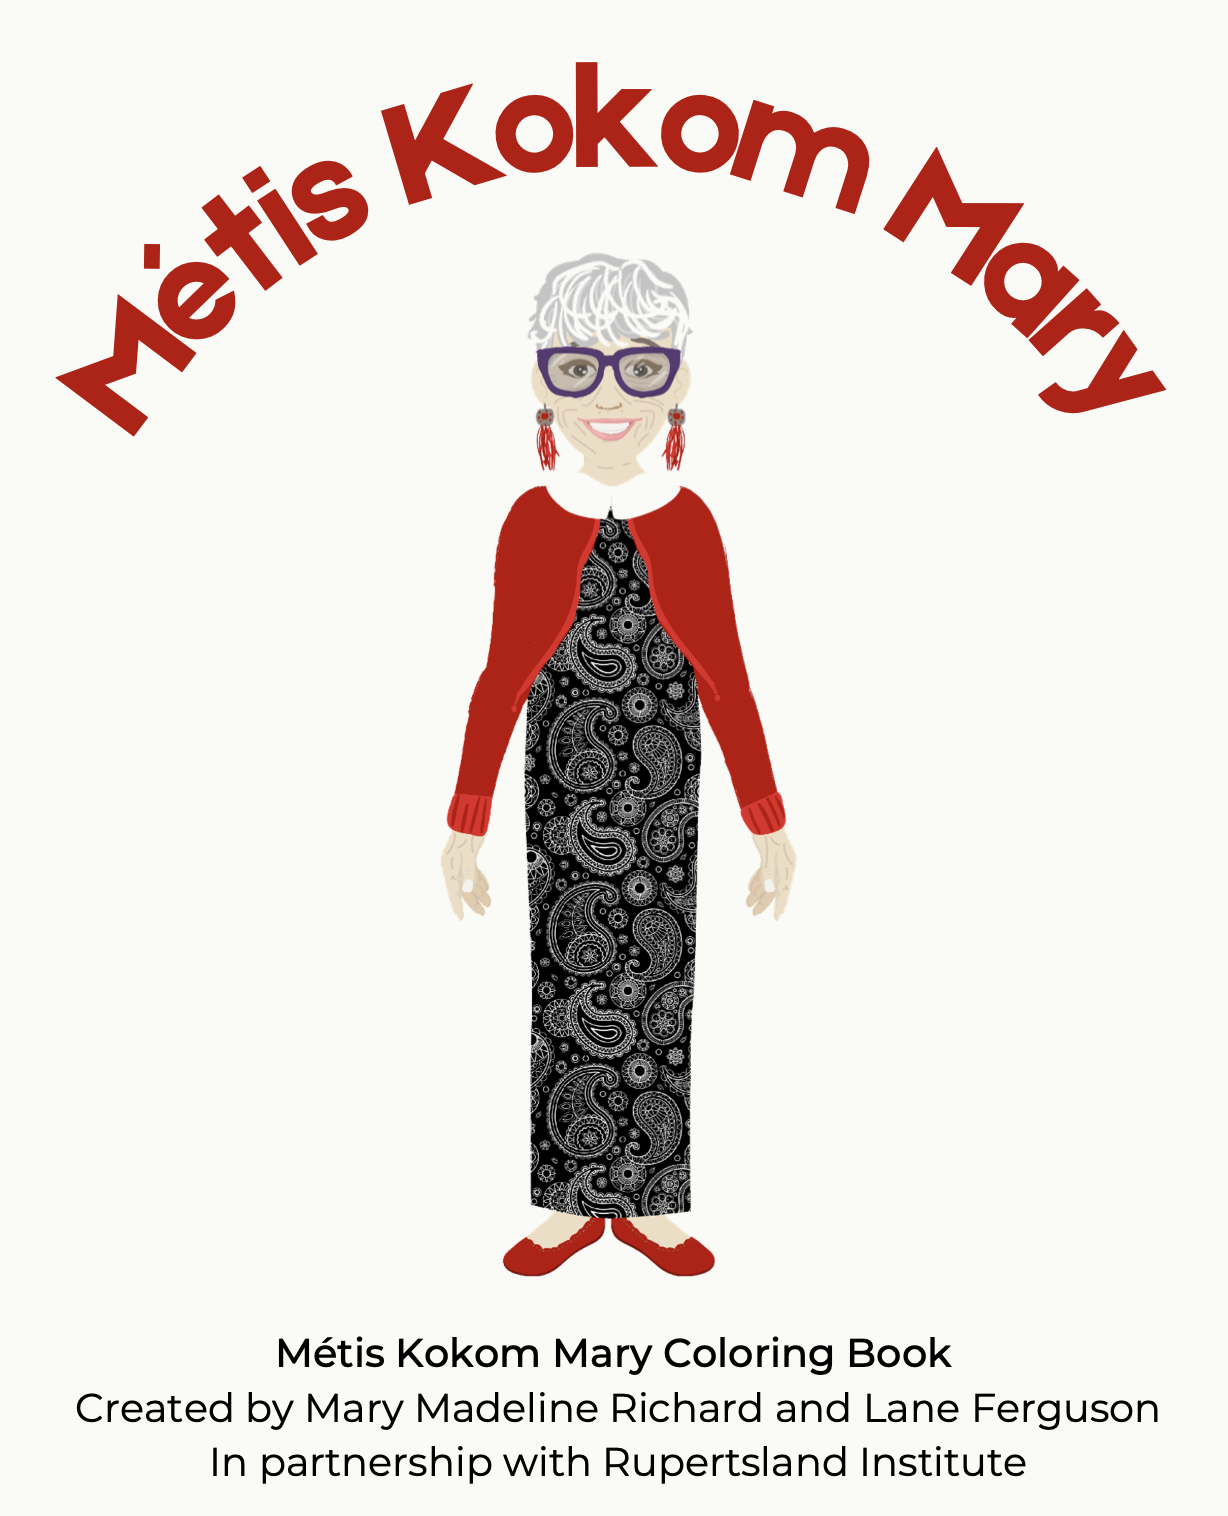 Region 6: Métis Kokum Mary Colouring Book